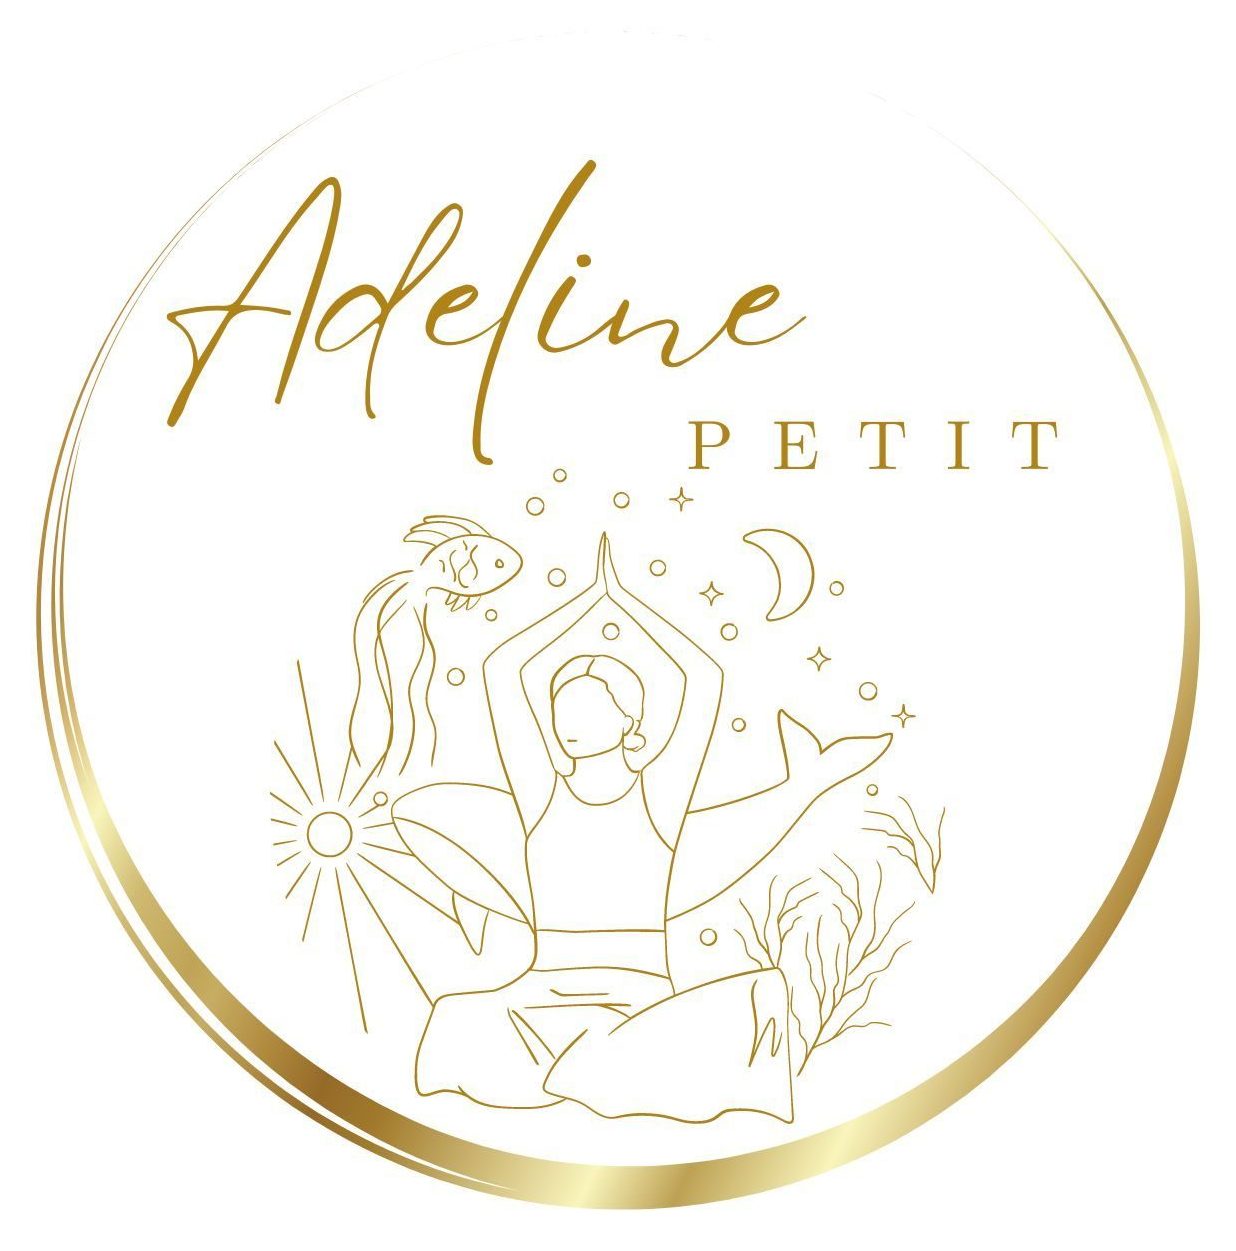 Adeline PETIT, E.I.